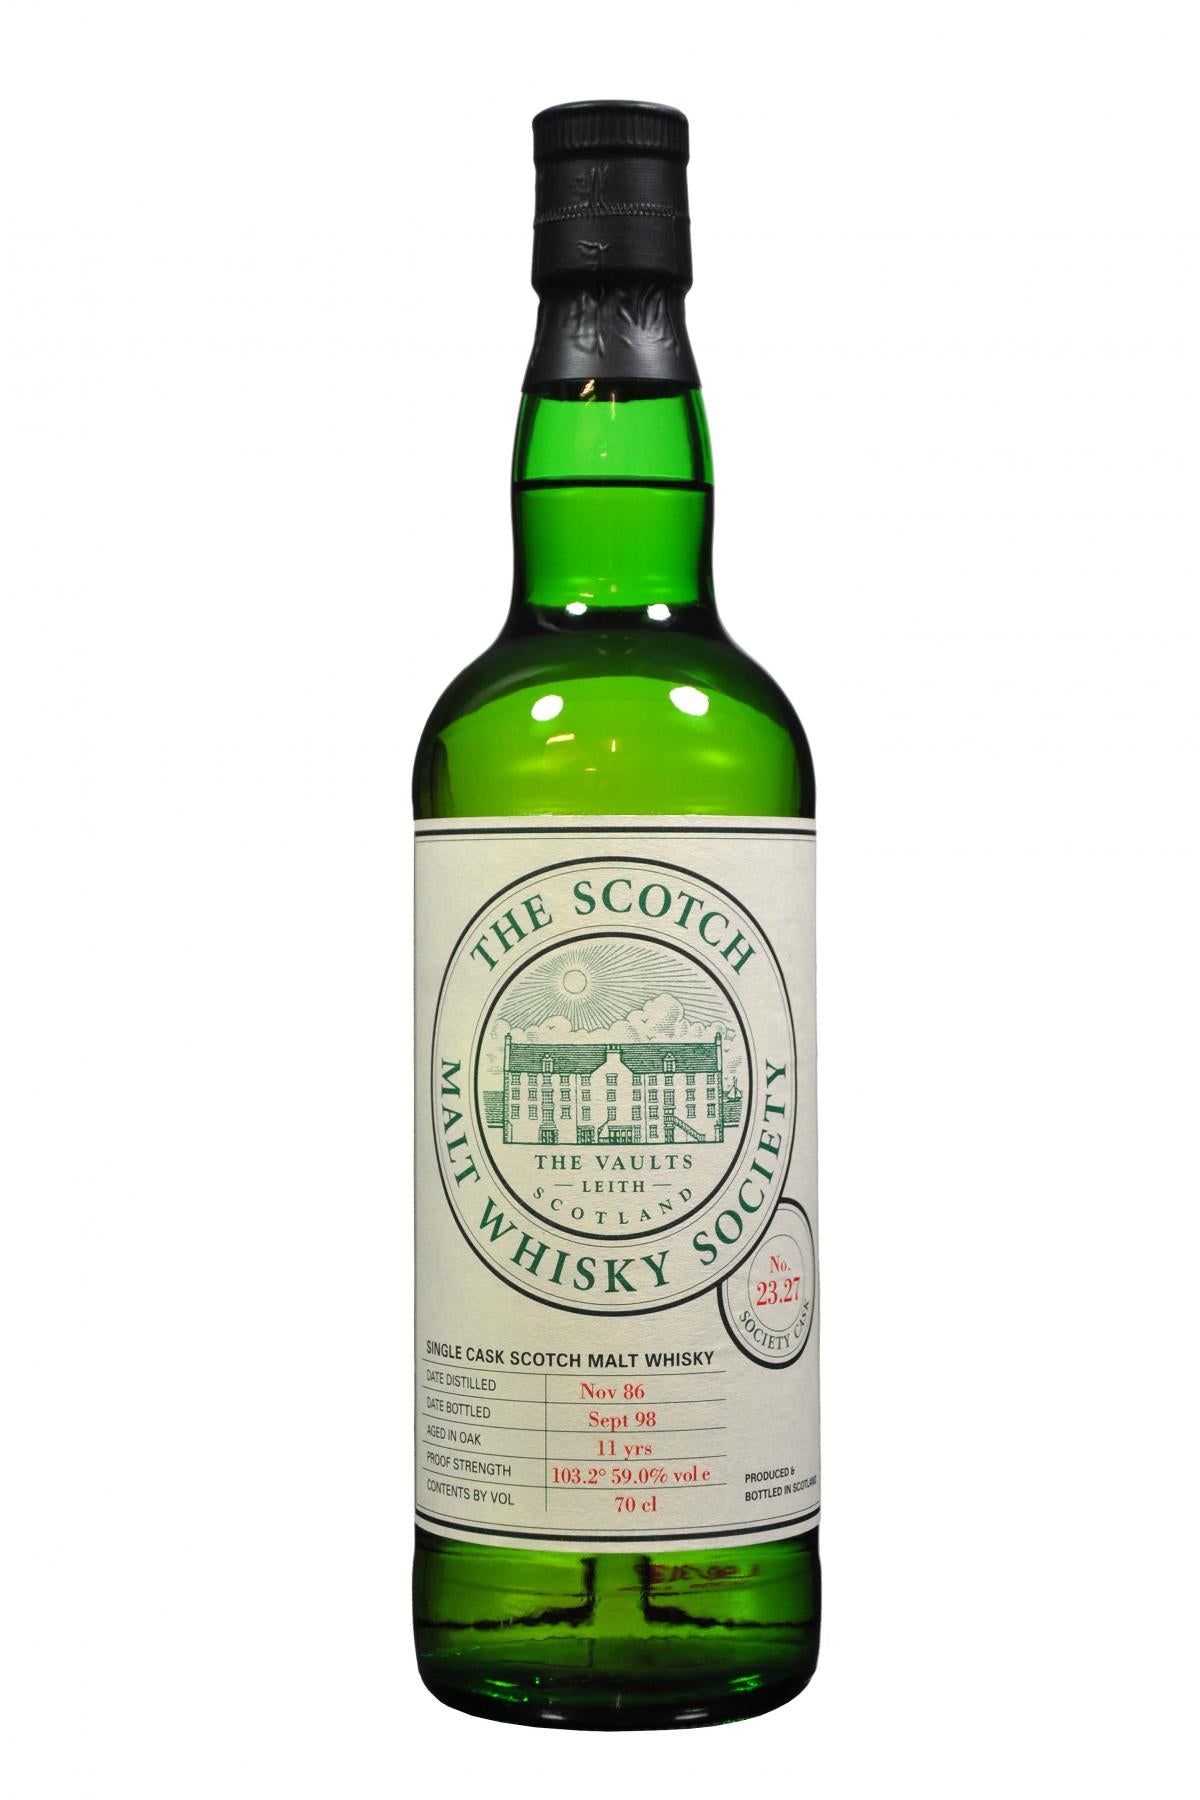 bruichladdich 1986-1998 scotch malt whisky society 23.27, islay single malt scotch whisky